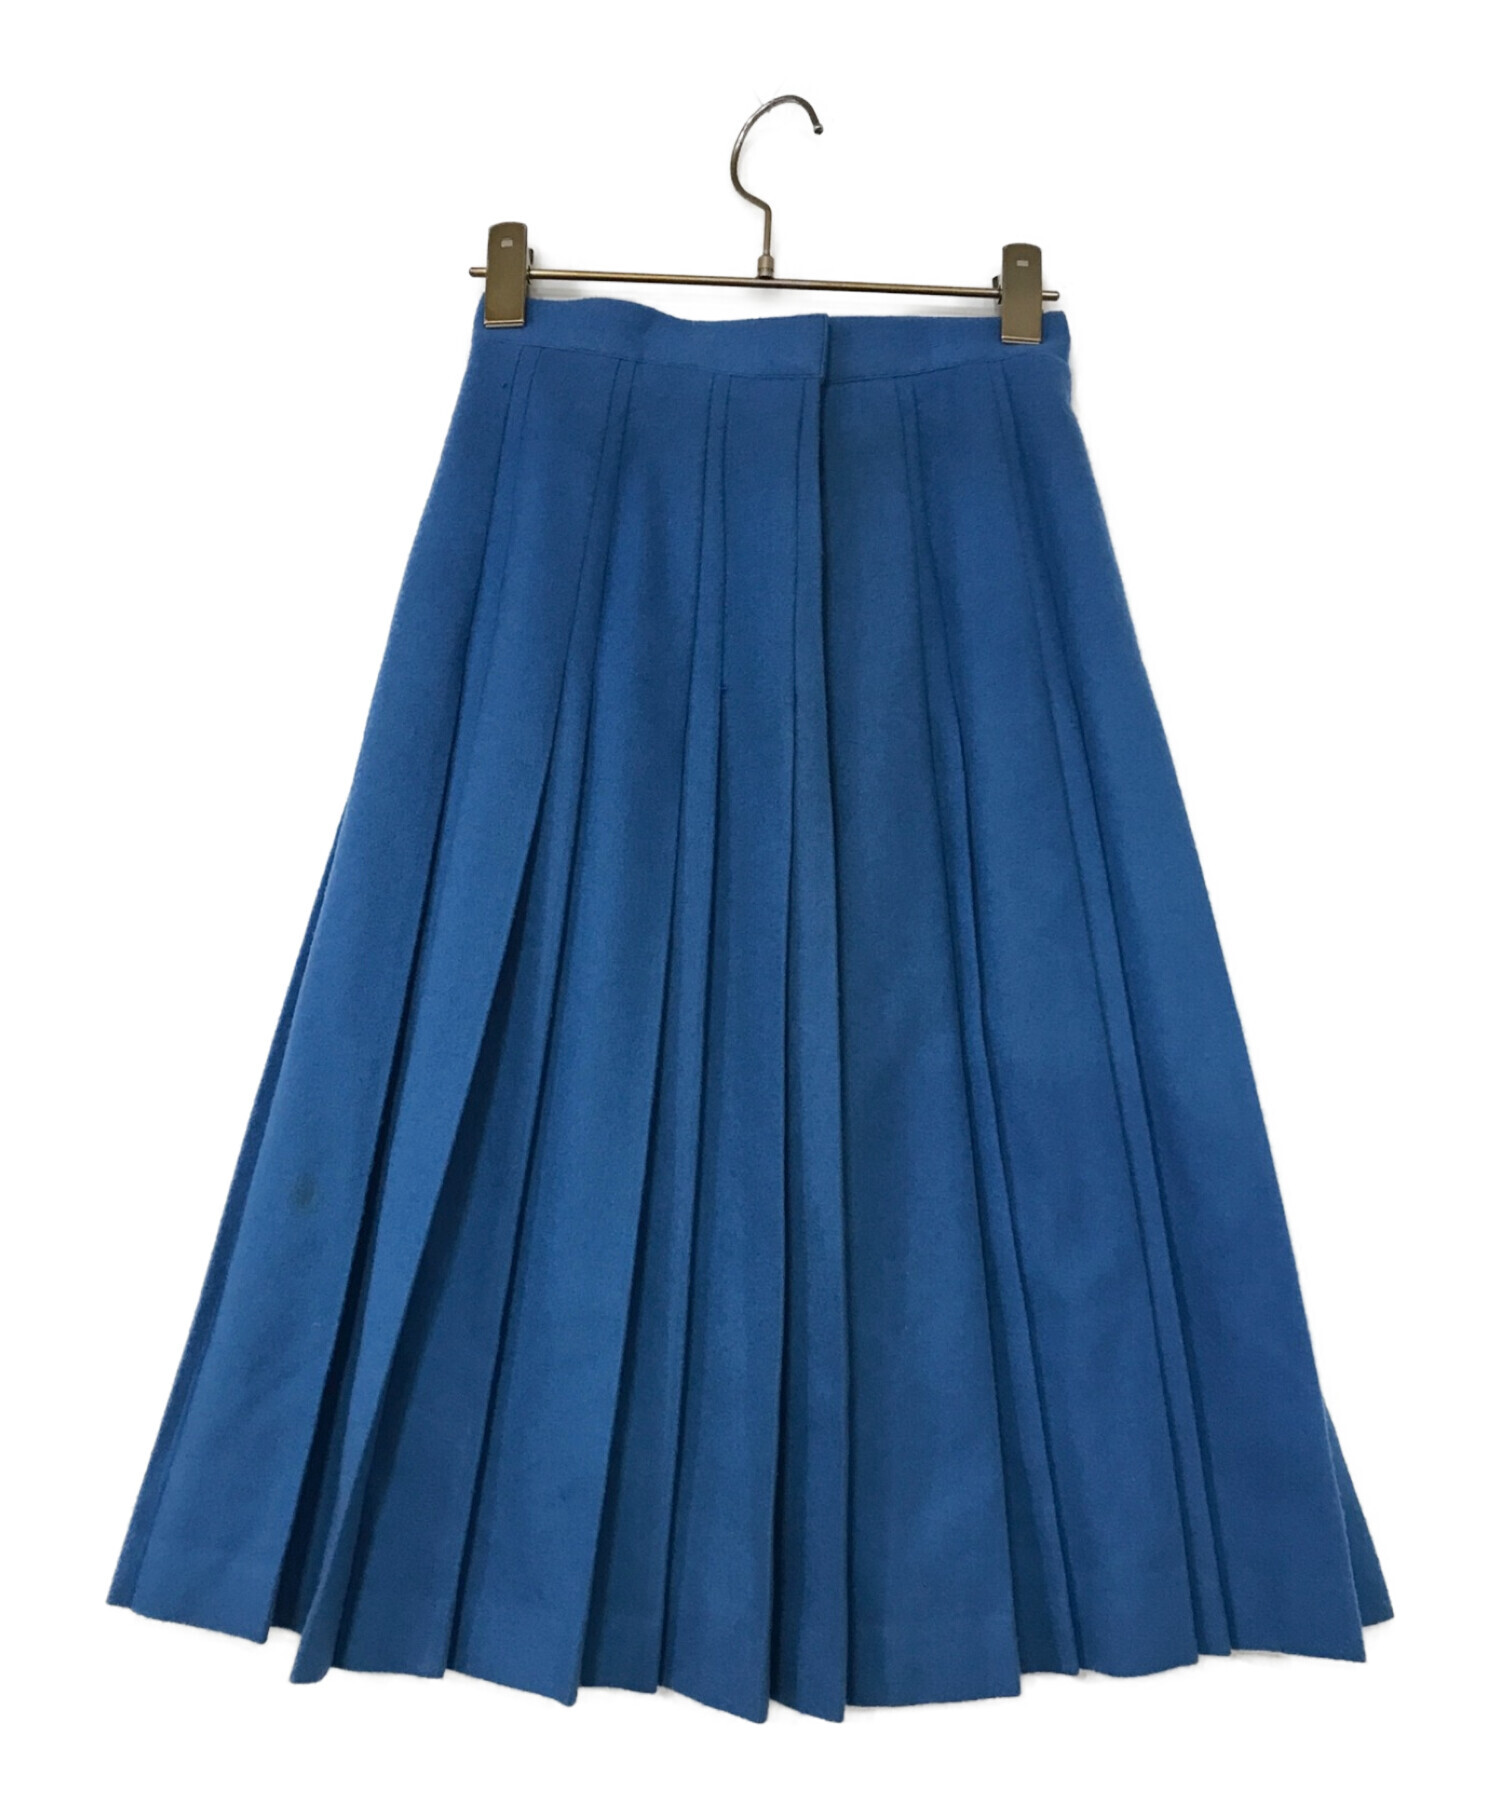 Christian Dior Sports (クリスチャンディオールスポーツ) ウールプリーツスカート ブルー サイズ:S